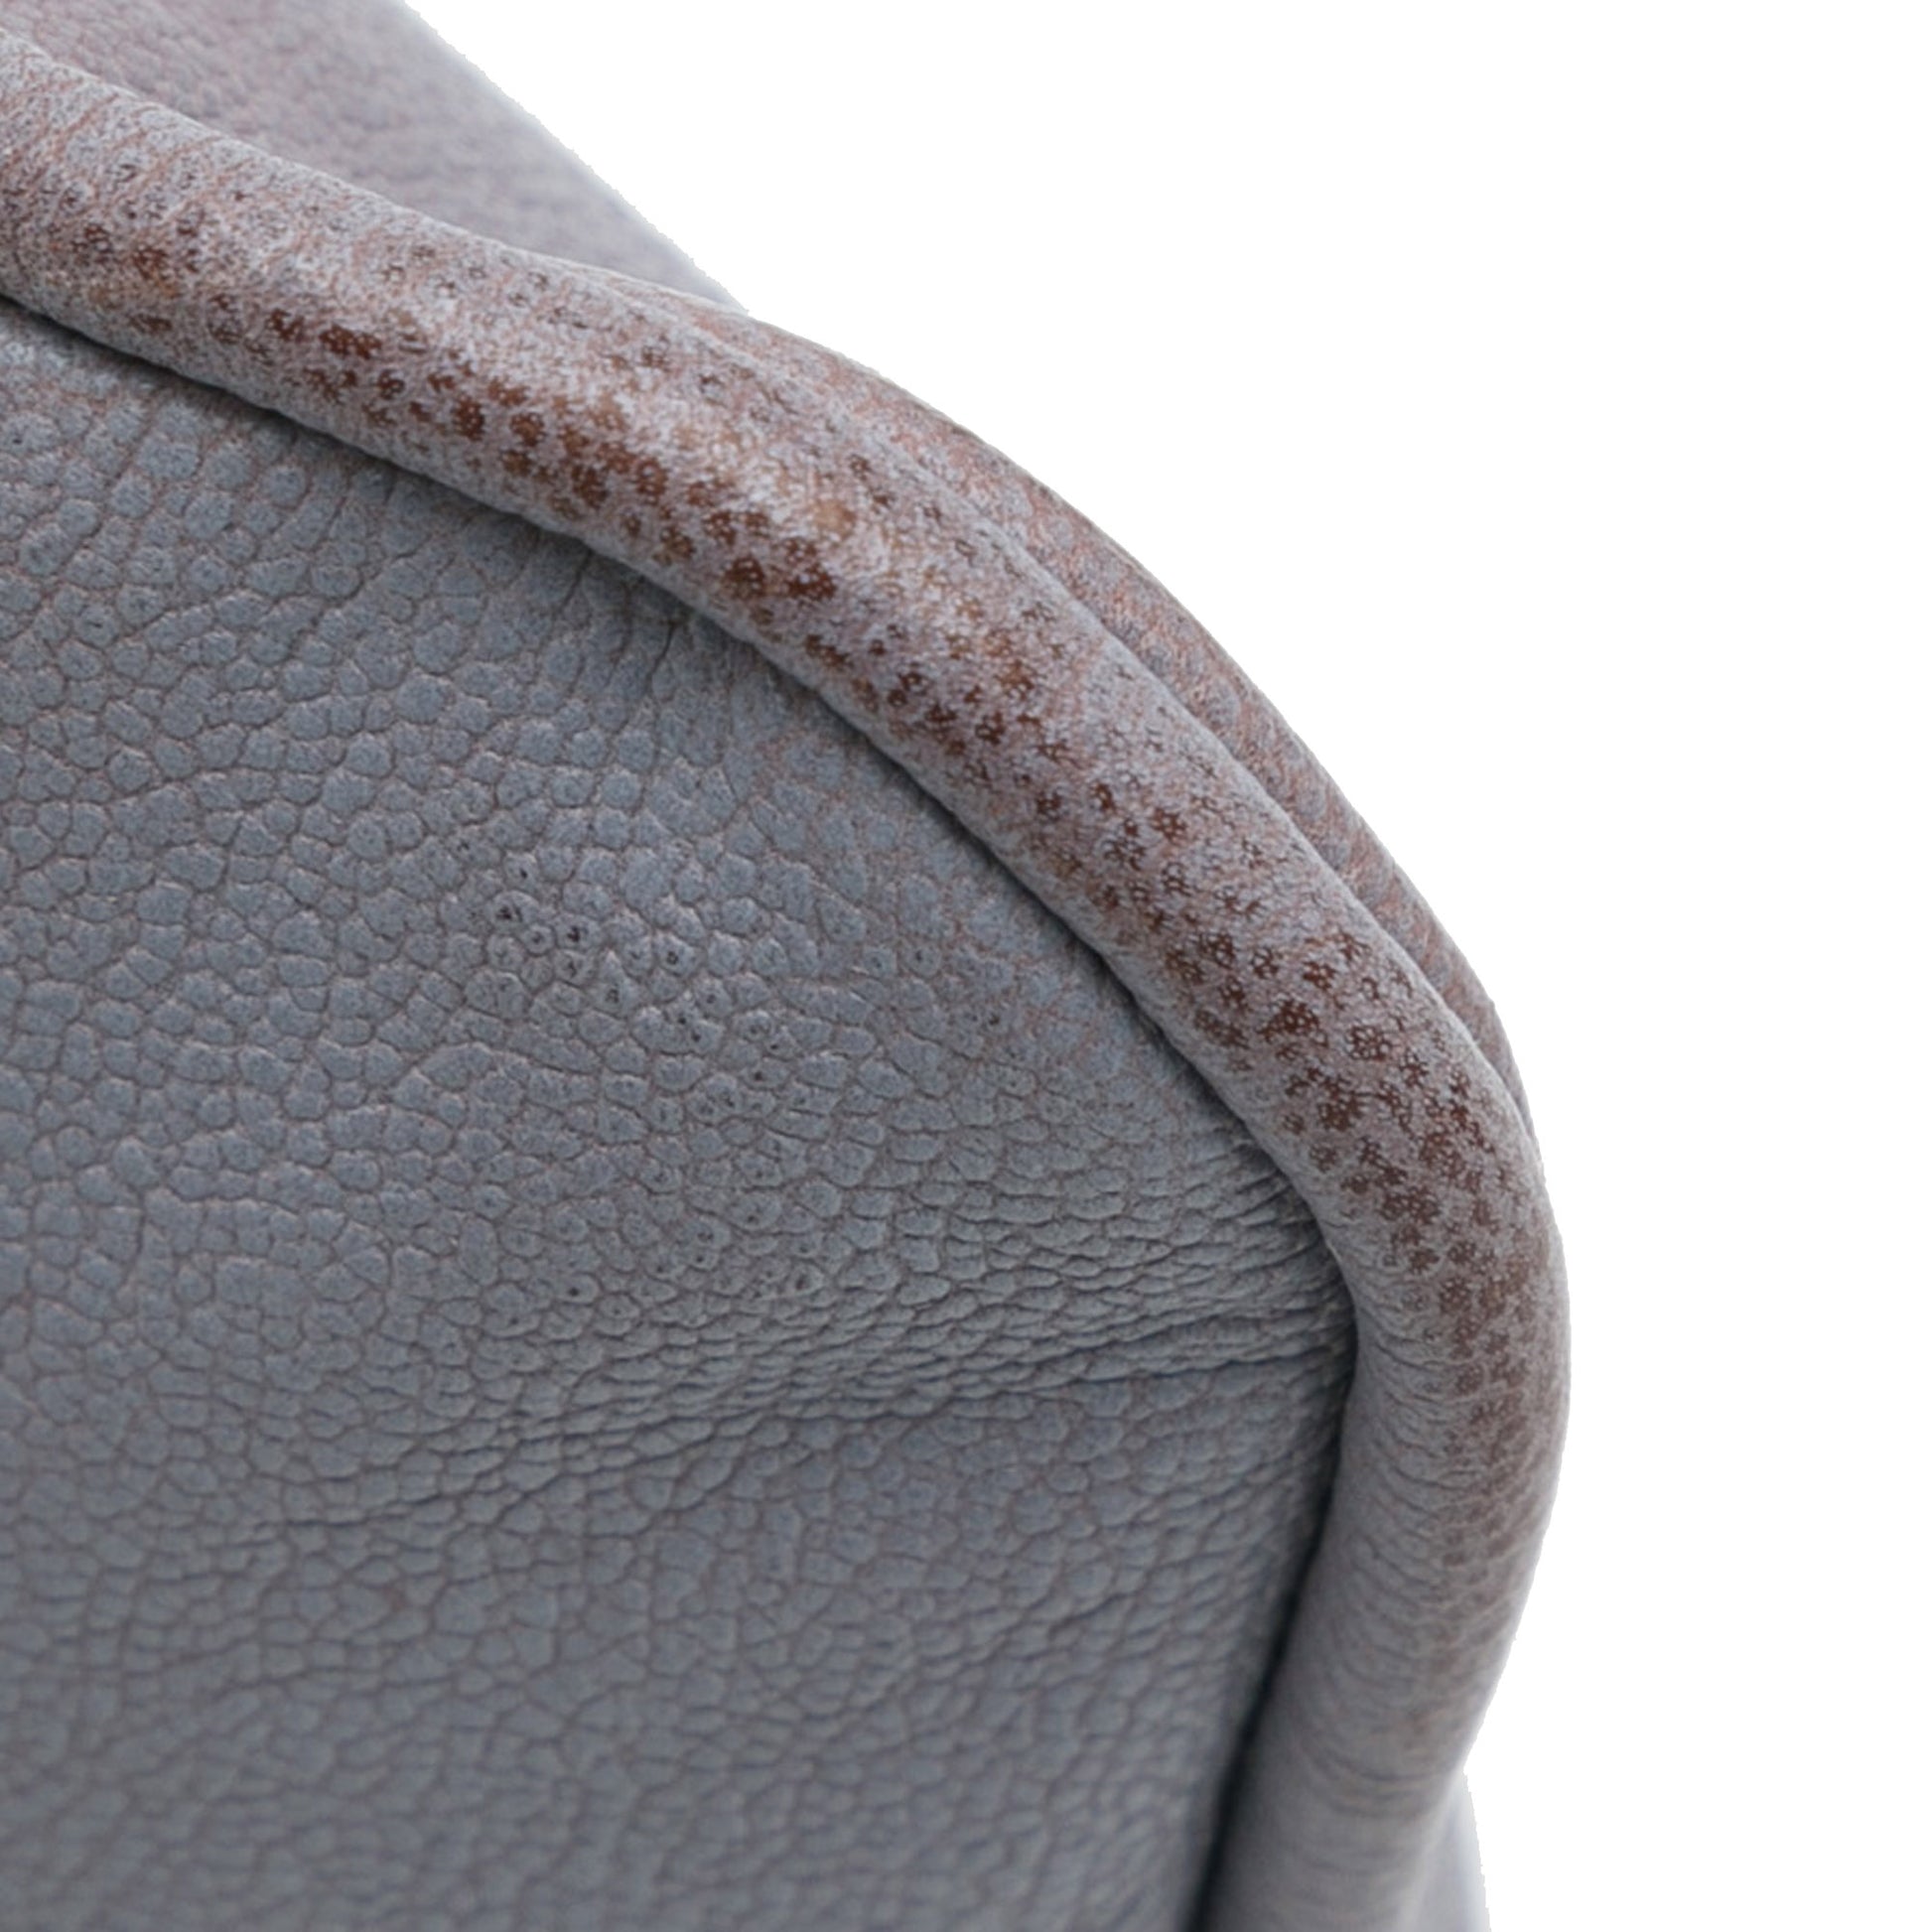 Leather Shoulder Bag Gray - Gaby Paris